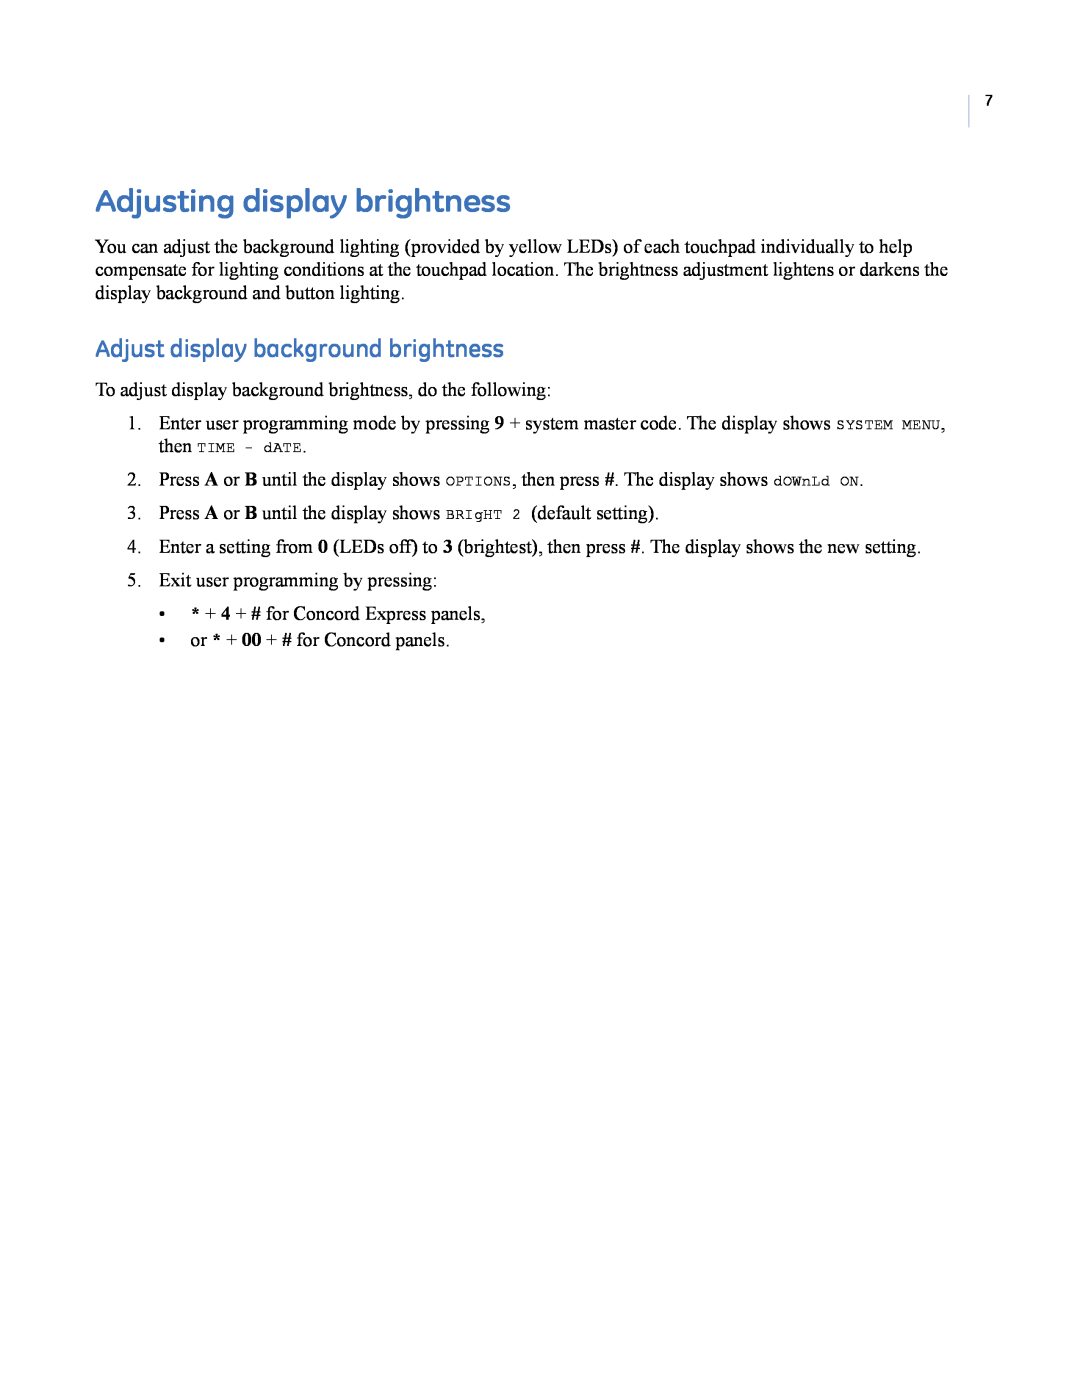 GE FTP-1000 installation manual Adjusting display brightness, Adjust display background brightness 